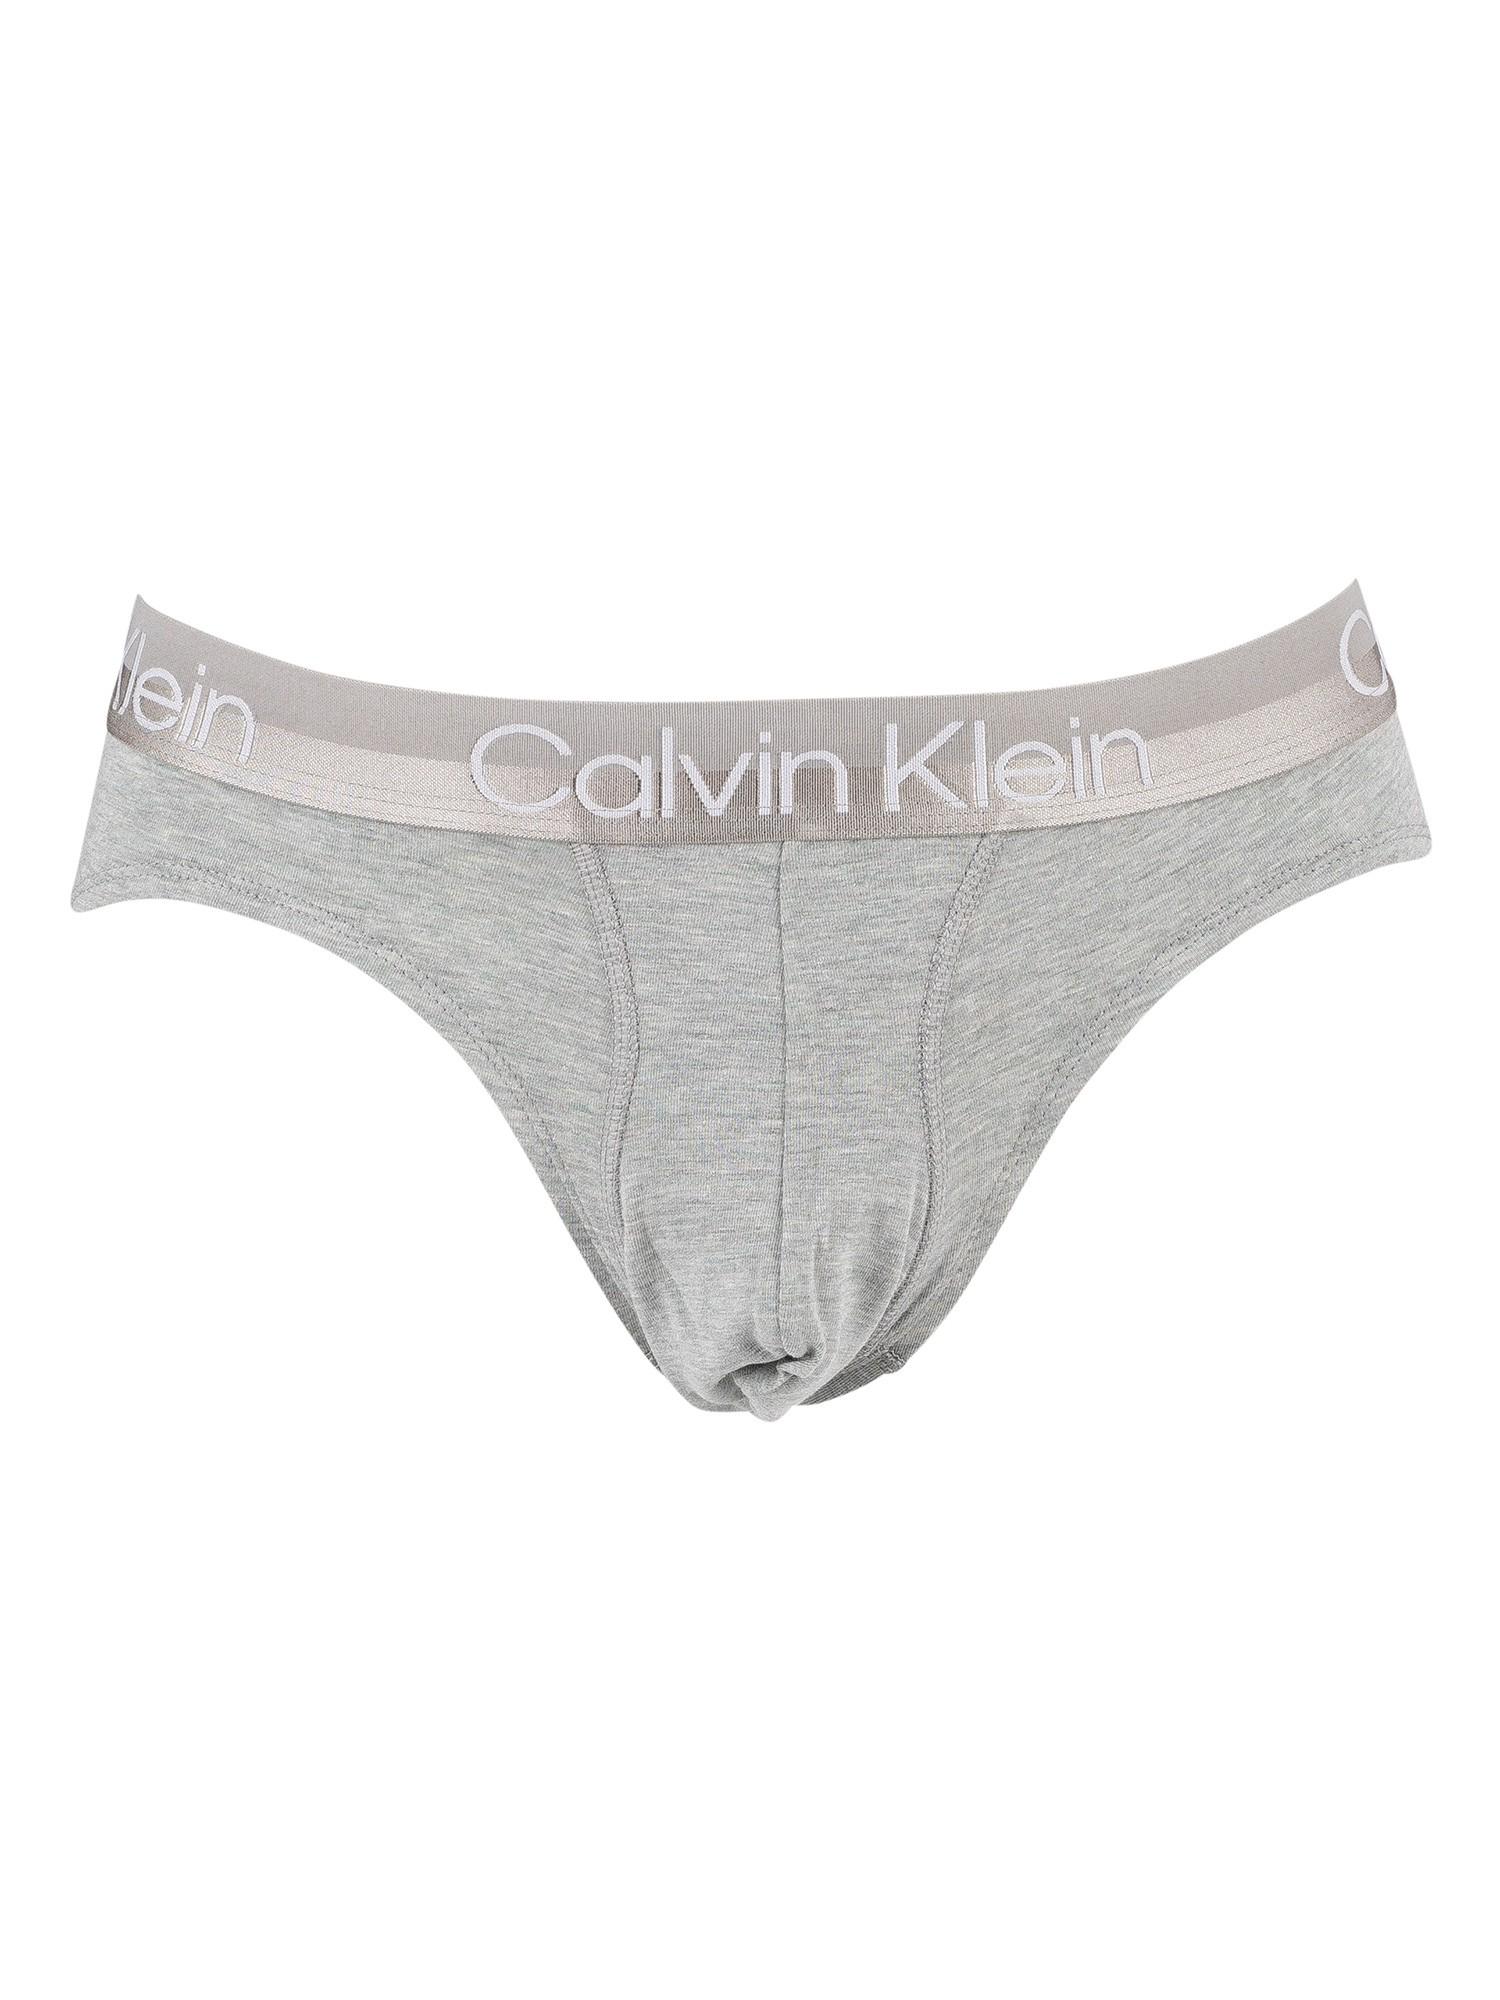 Calvin Klein Mens Modern Structure Hip Brief 3 Pack - Belle Lingerie